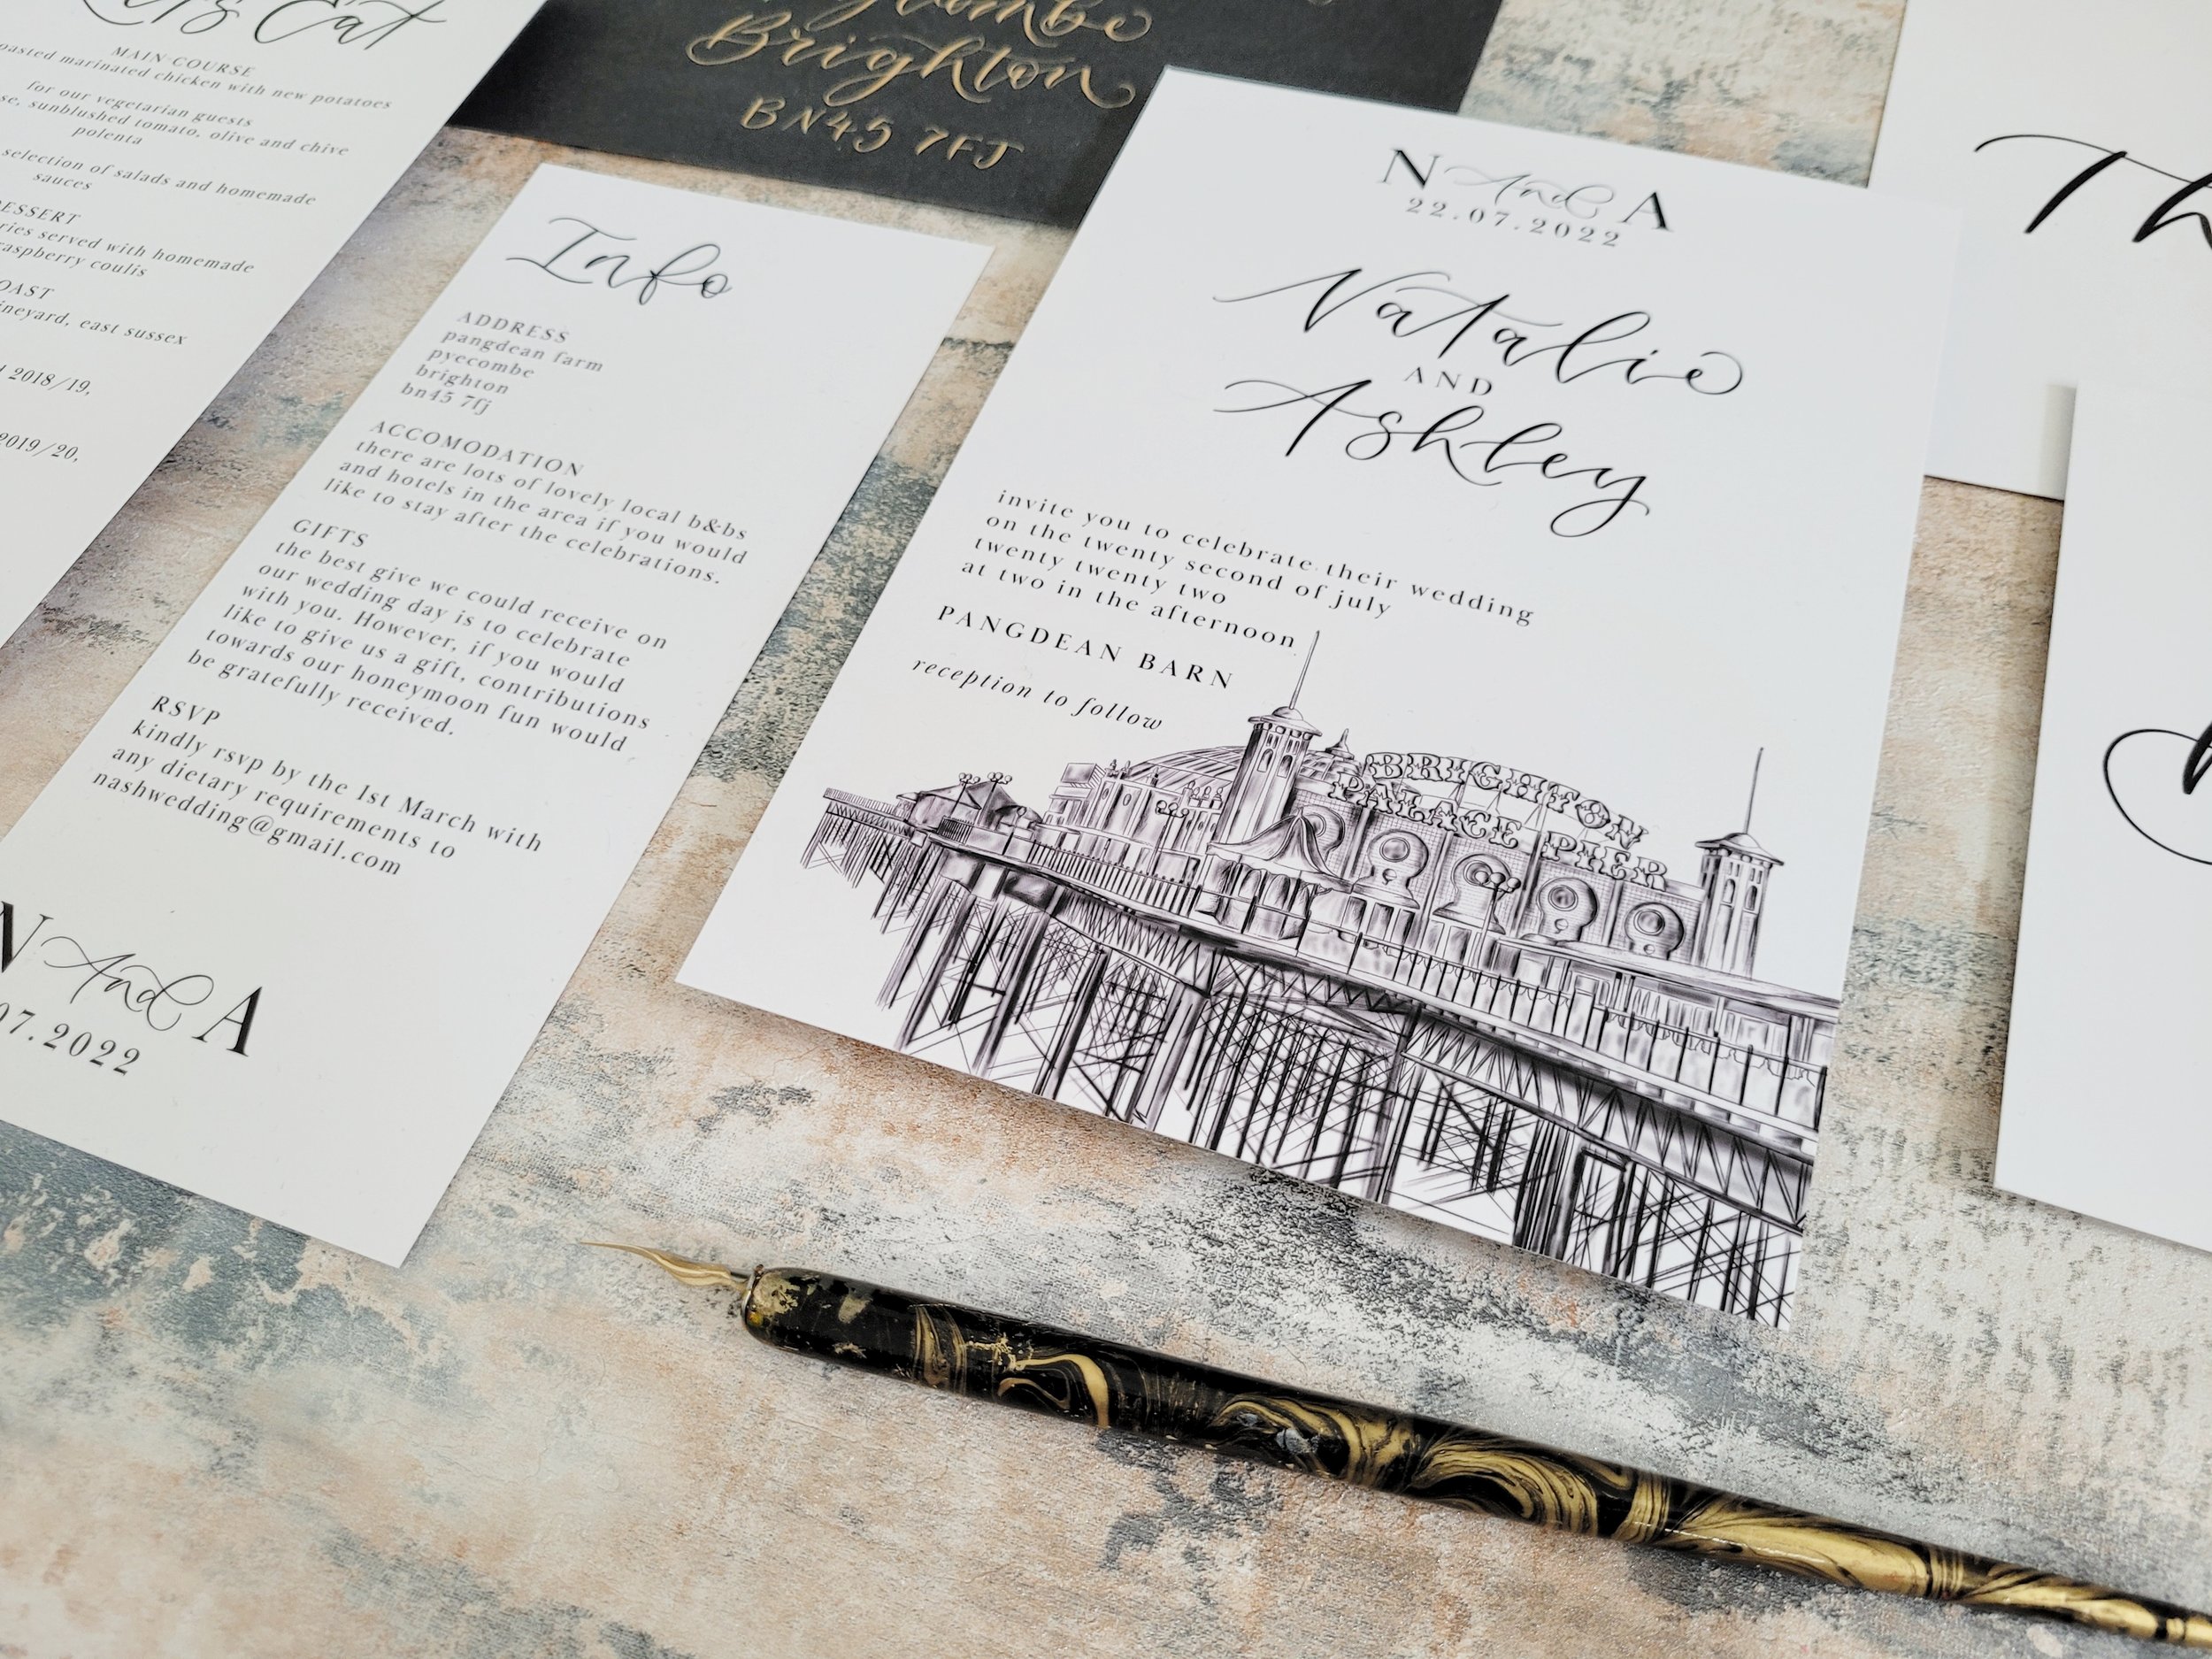 Brighton wedding stationery with pier illustration and modern calligraphy - monochrome minimalist invitations.jpeg